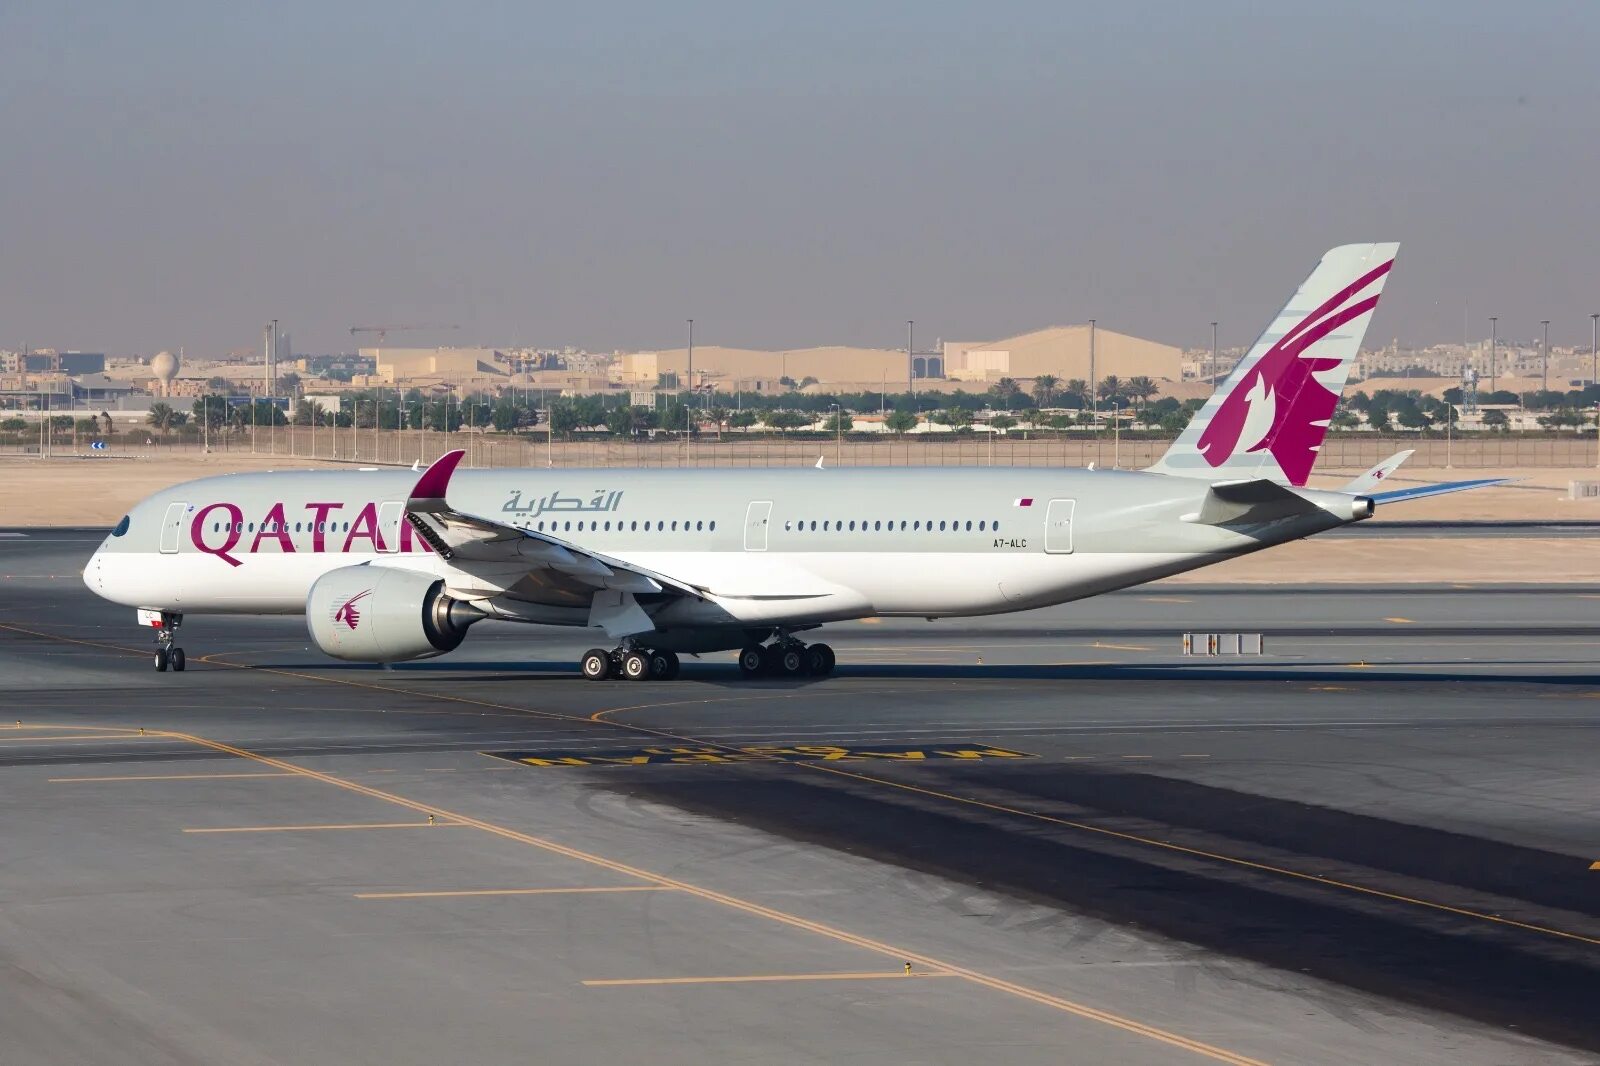 Катар дав. Катар Эйрвейз. Катар авиакомпания. Катар Эйрлайнс самолеты. Самолет Катар Эйрвейз.